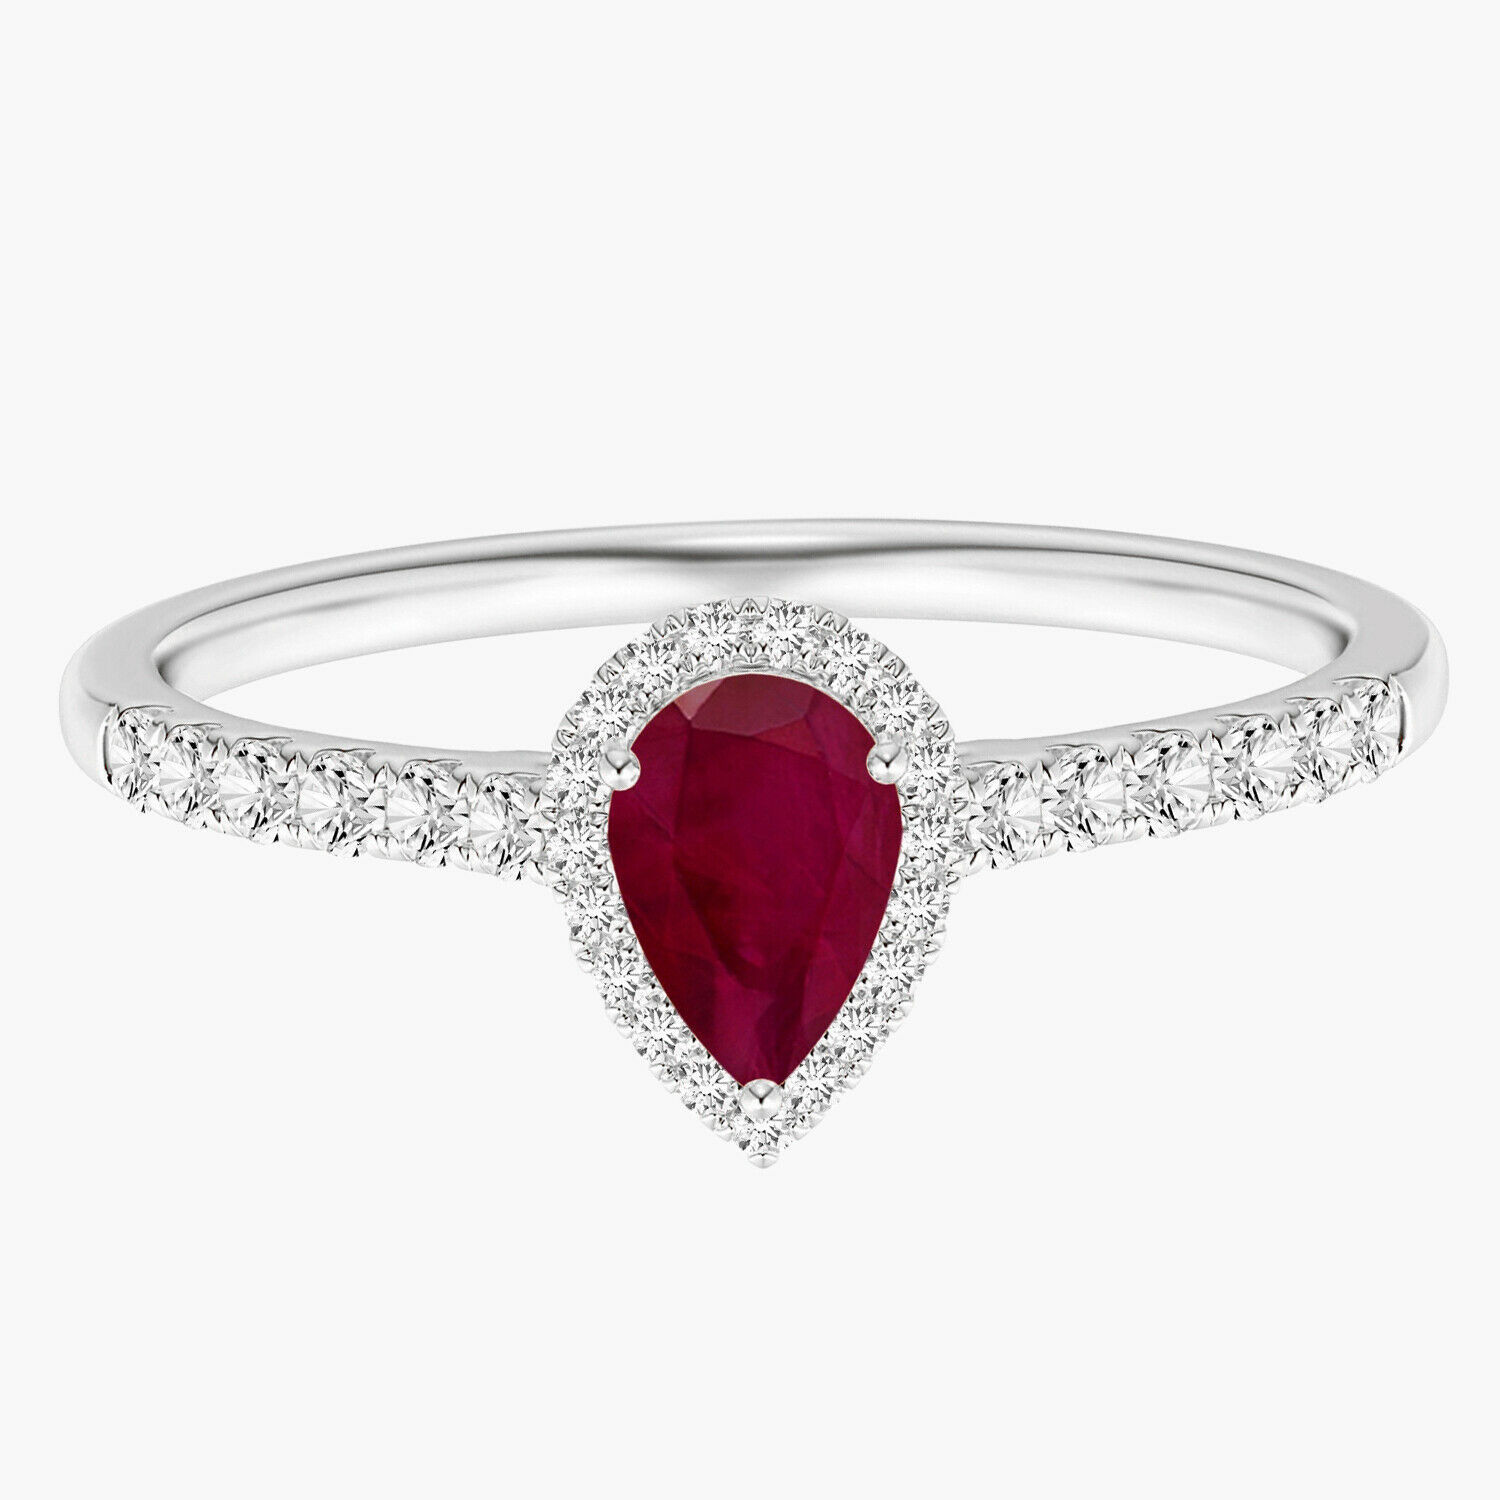 Kimaya Jewel - 0.75 ctw pear-shaped red ruby halo promise ring 10k white gold